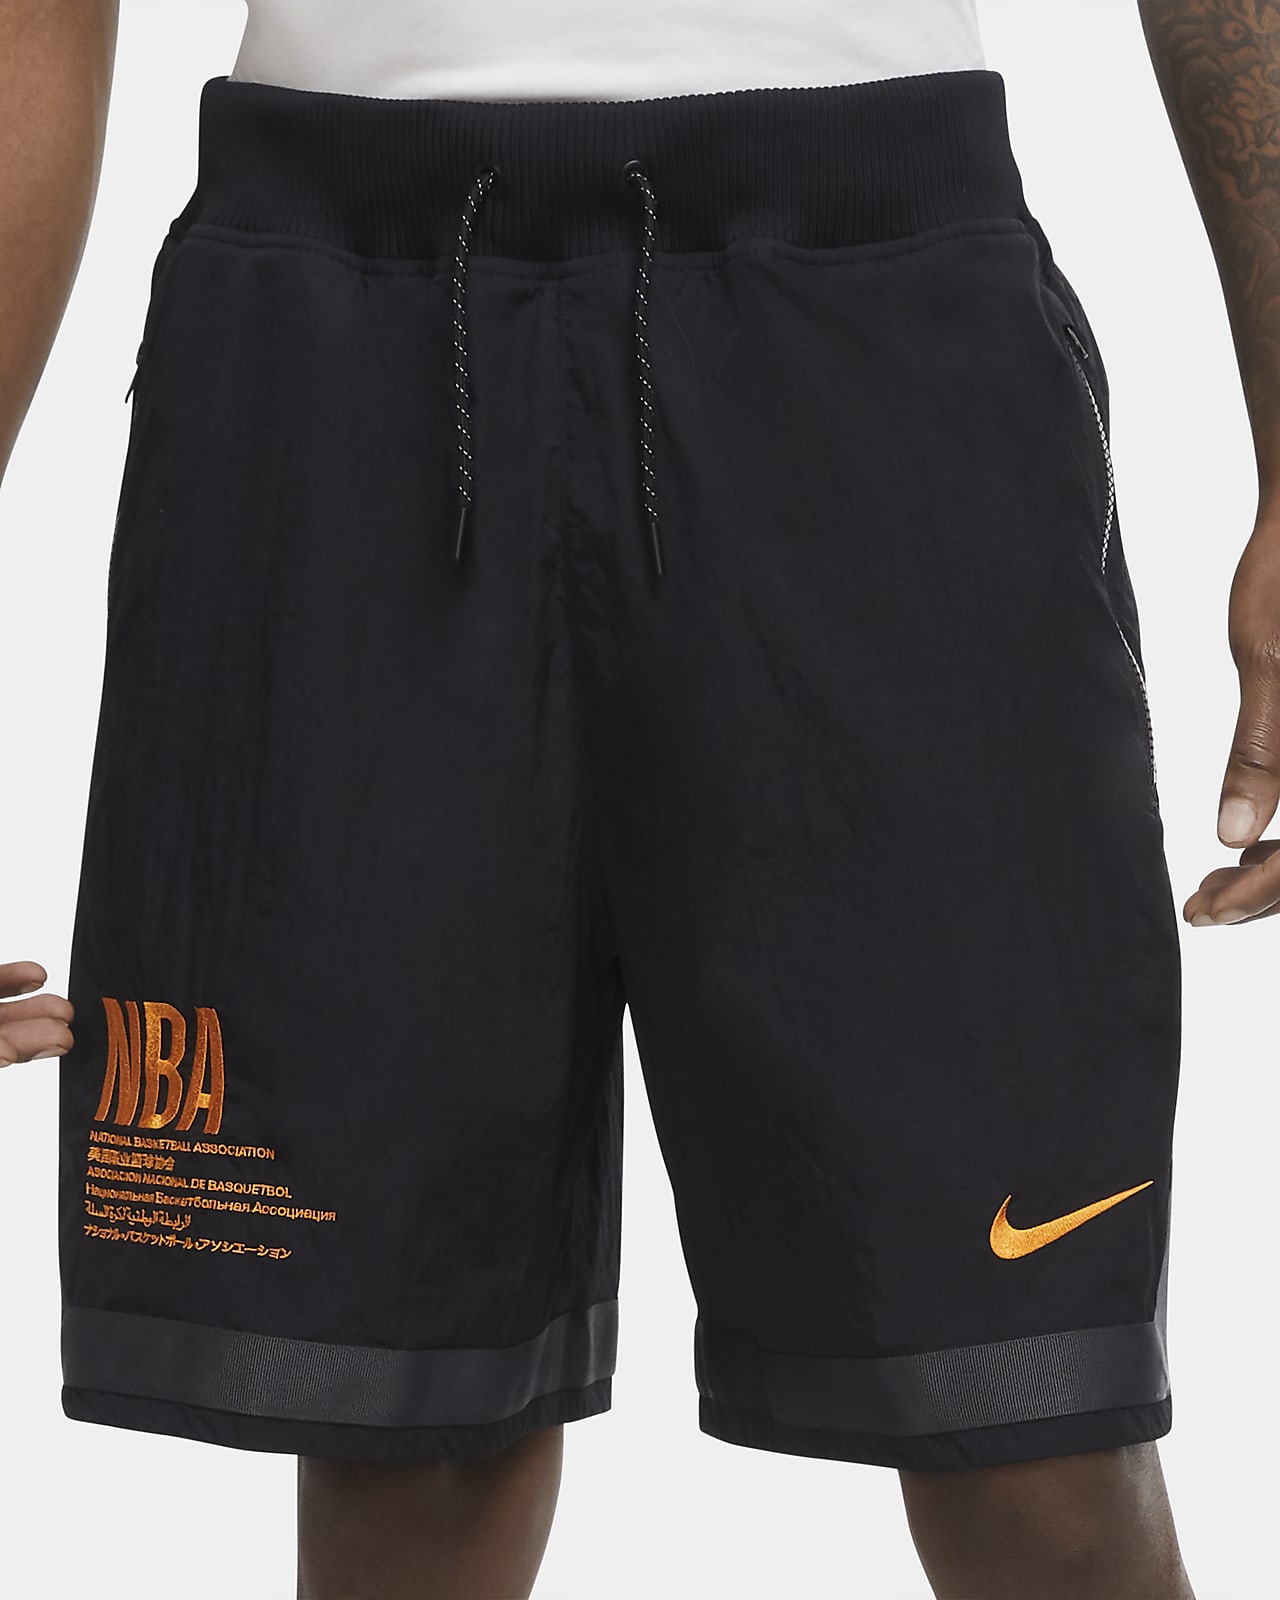 Team 31 Courtside Men's Nike NBA Shorts 